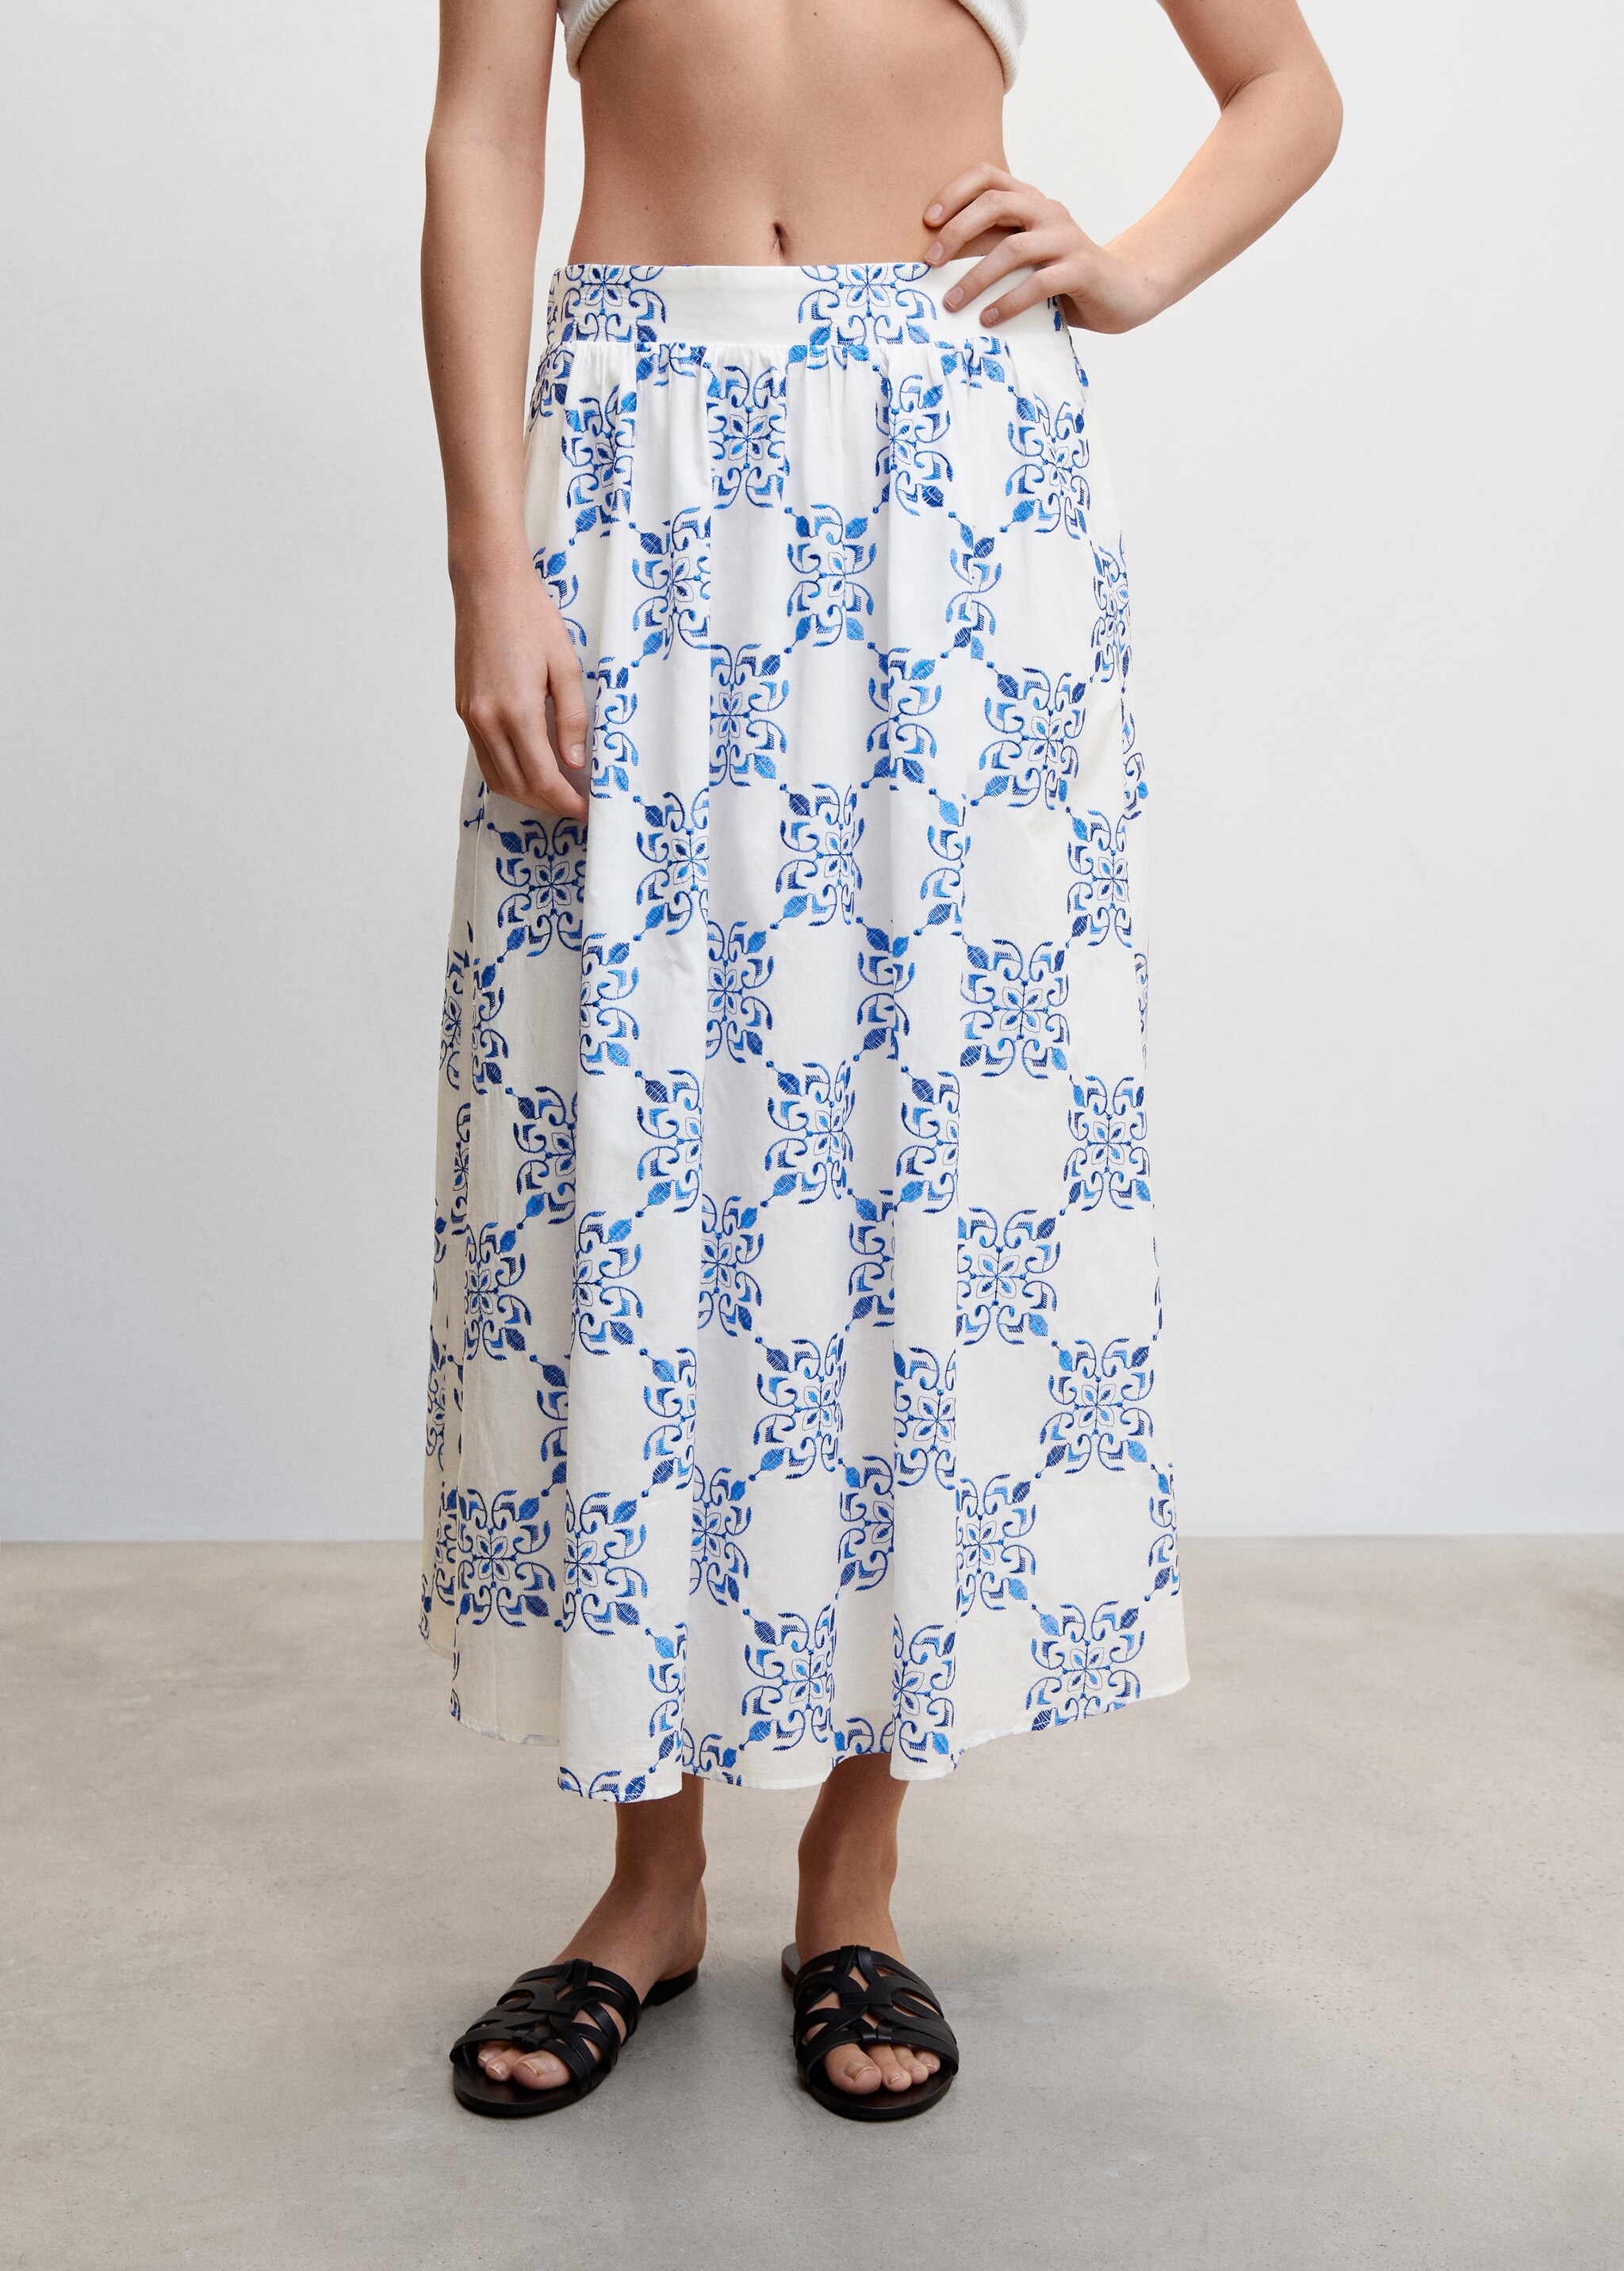 Printed skirt with pleat detail - Medium plane